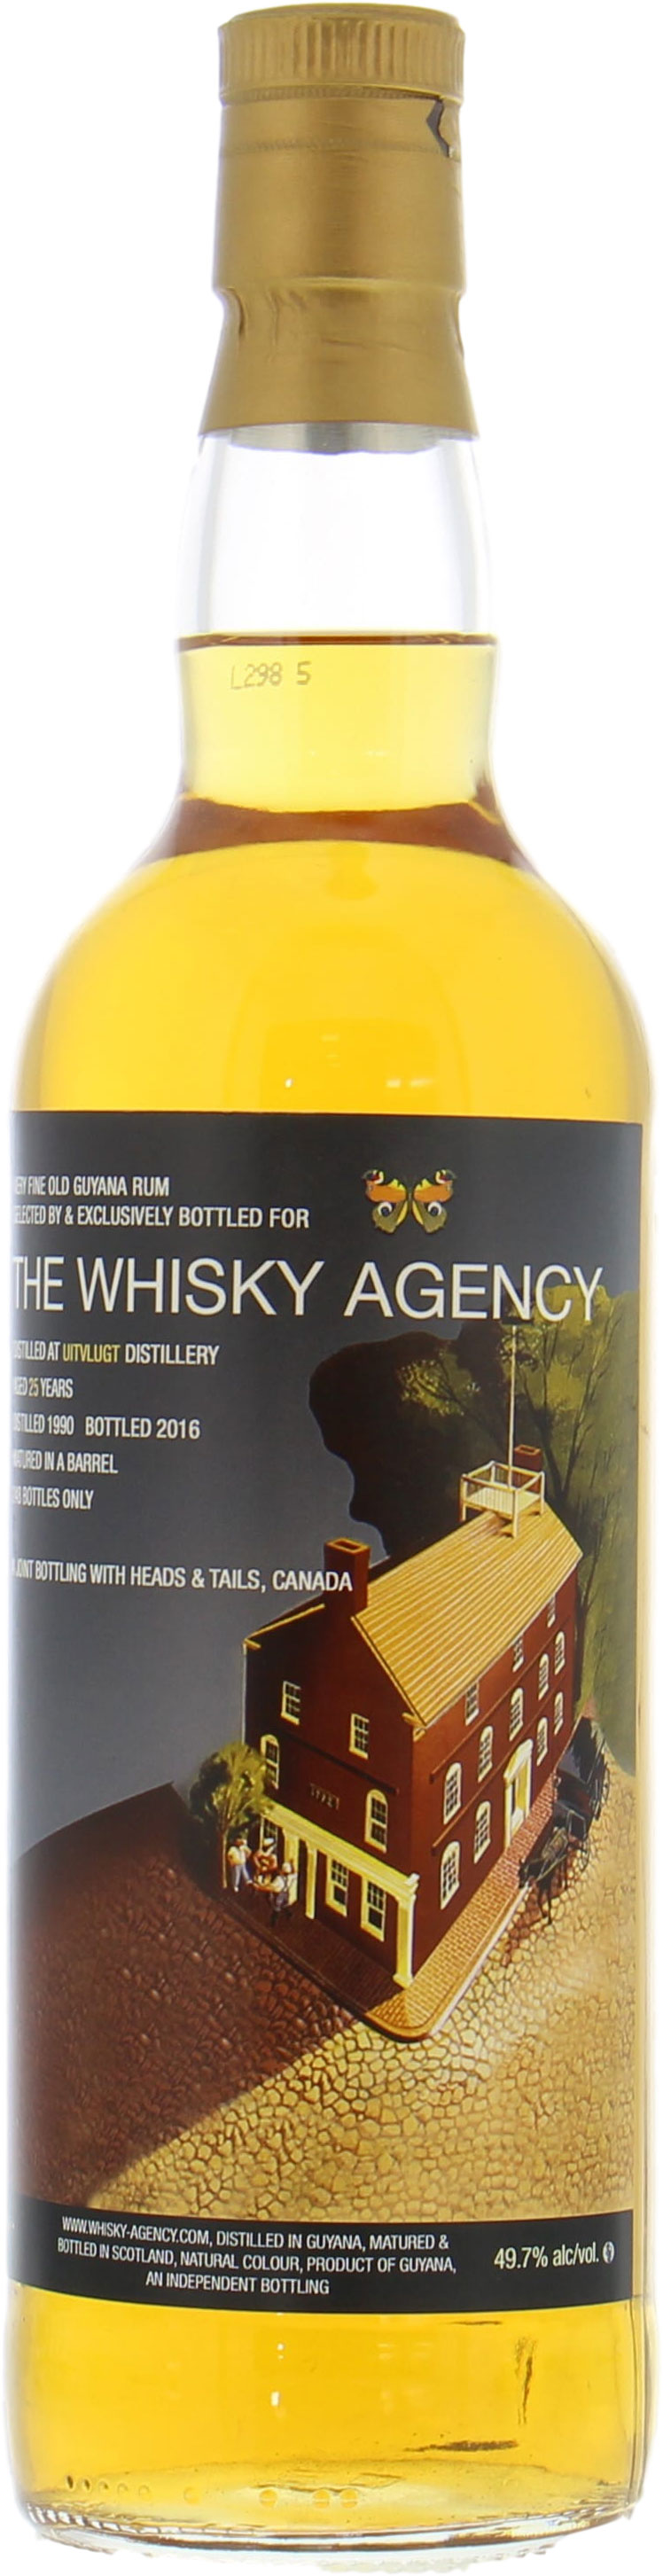 Uitvlugt - The whisky Agency 25 Years Old 49.7% 1990 Nederlands